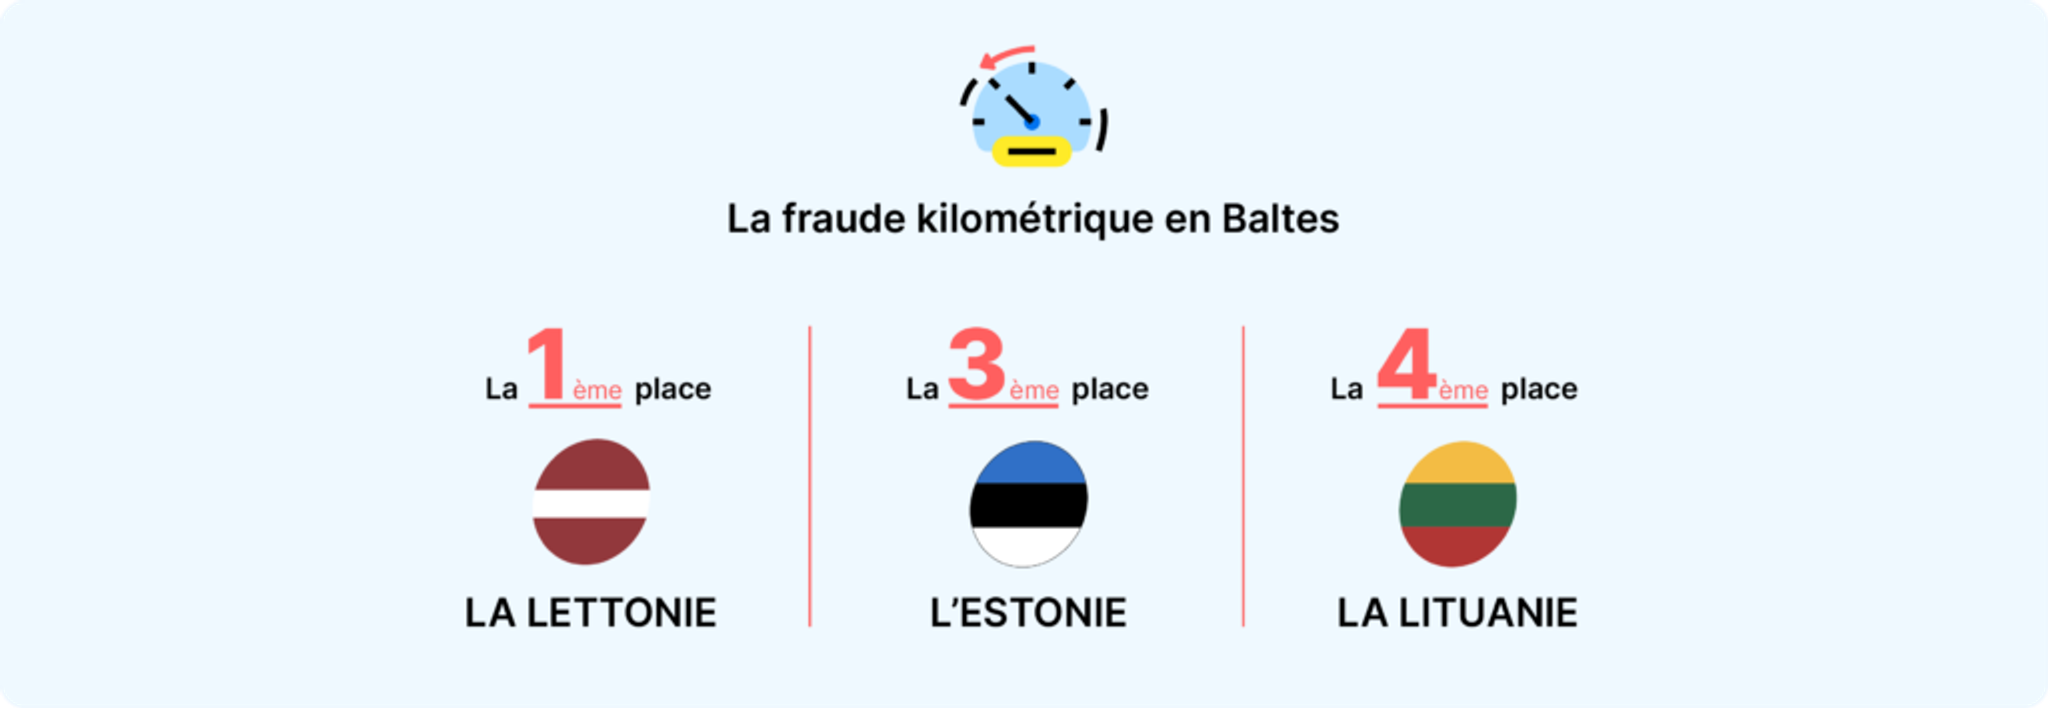 La fraude kilometrique en Baltes